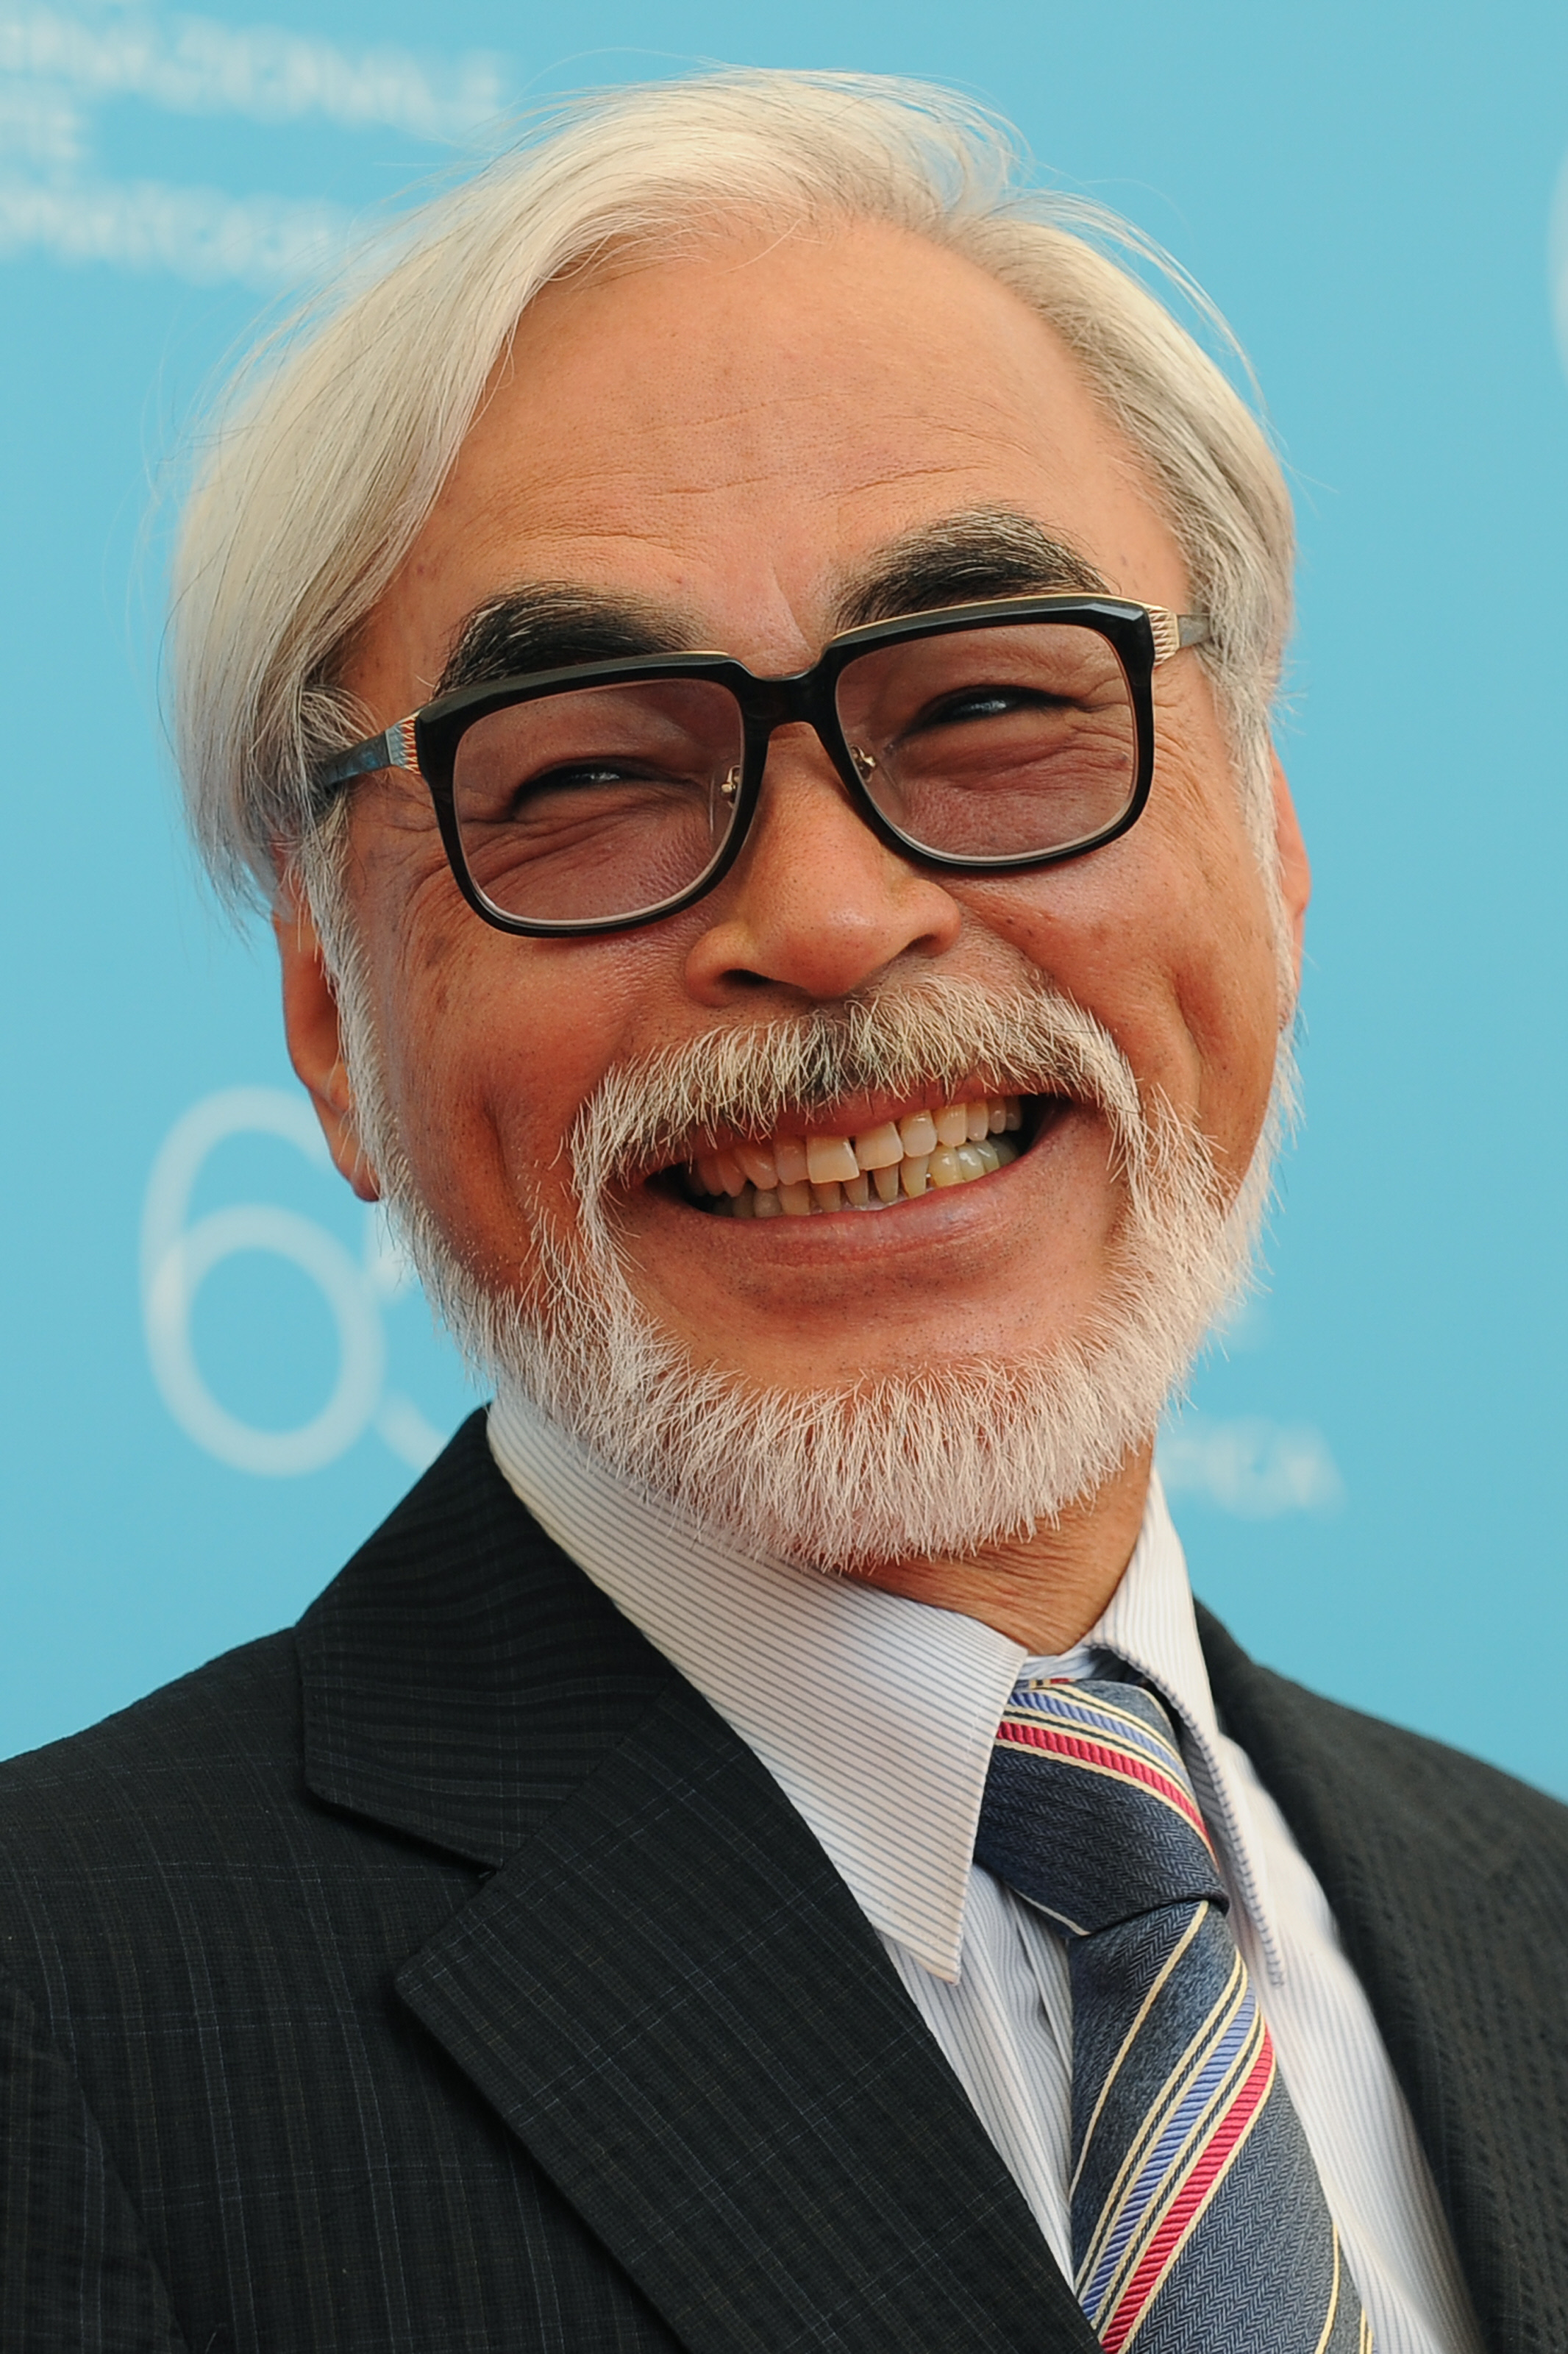 Femina | Les studios Ghibli arrêtent la production de films…